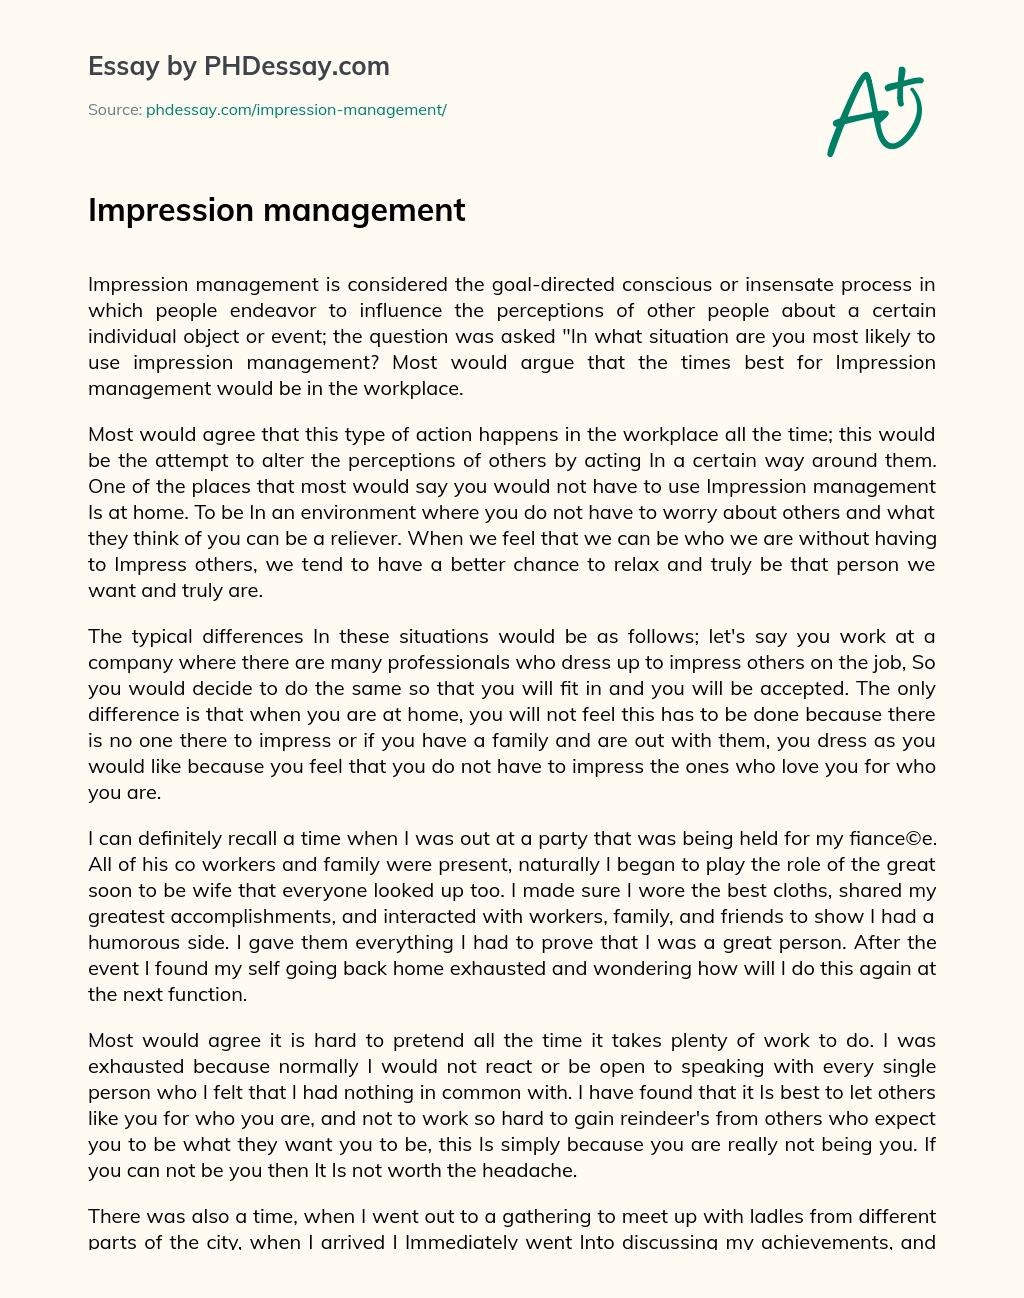 Impression management essay